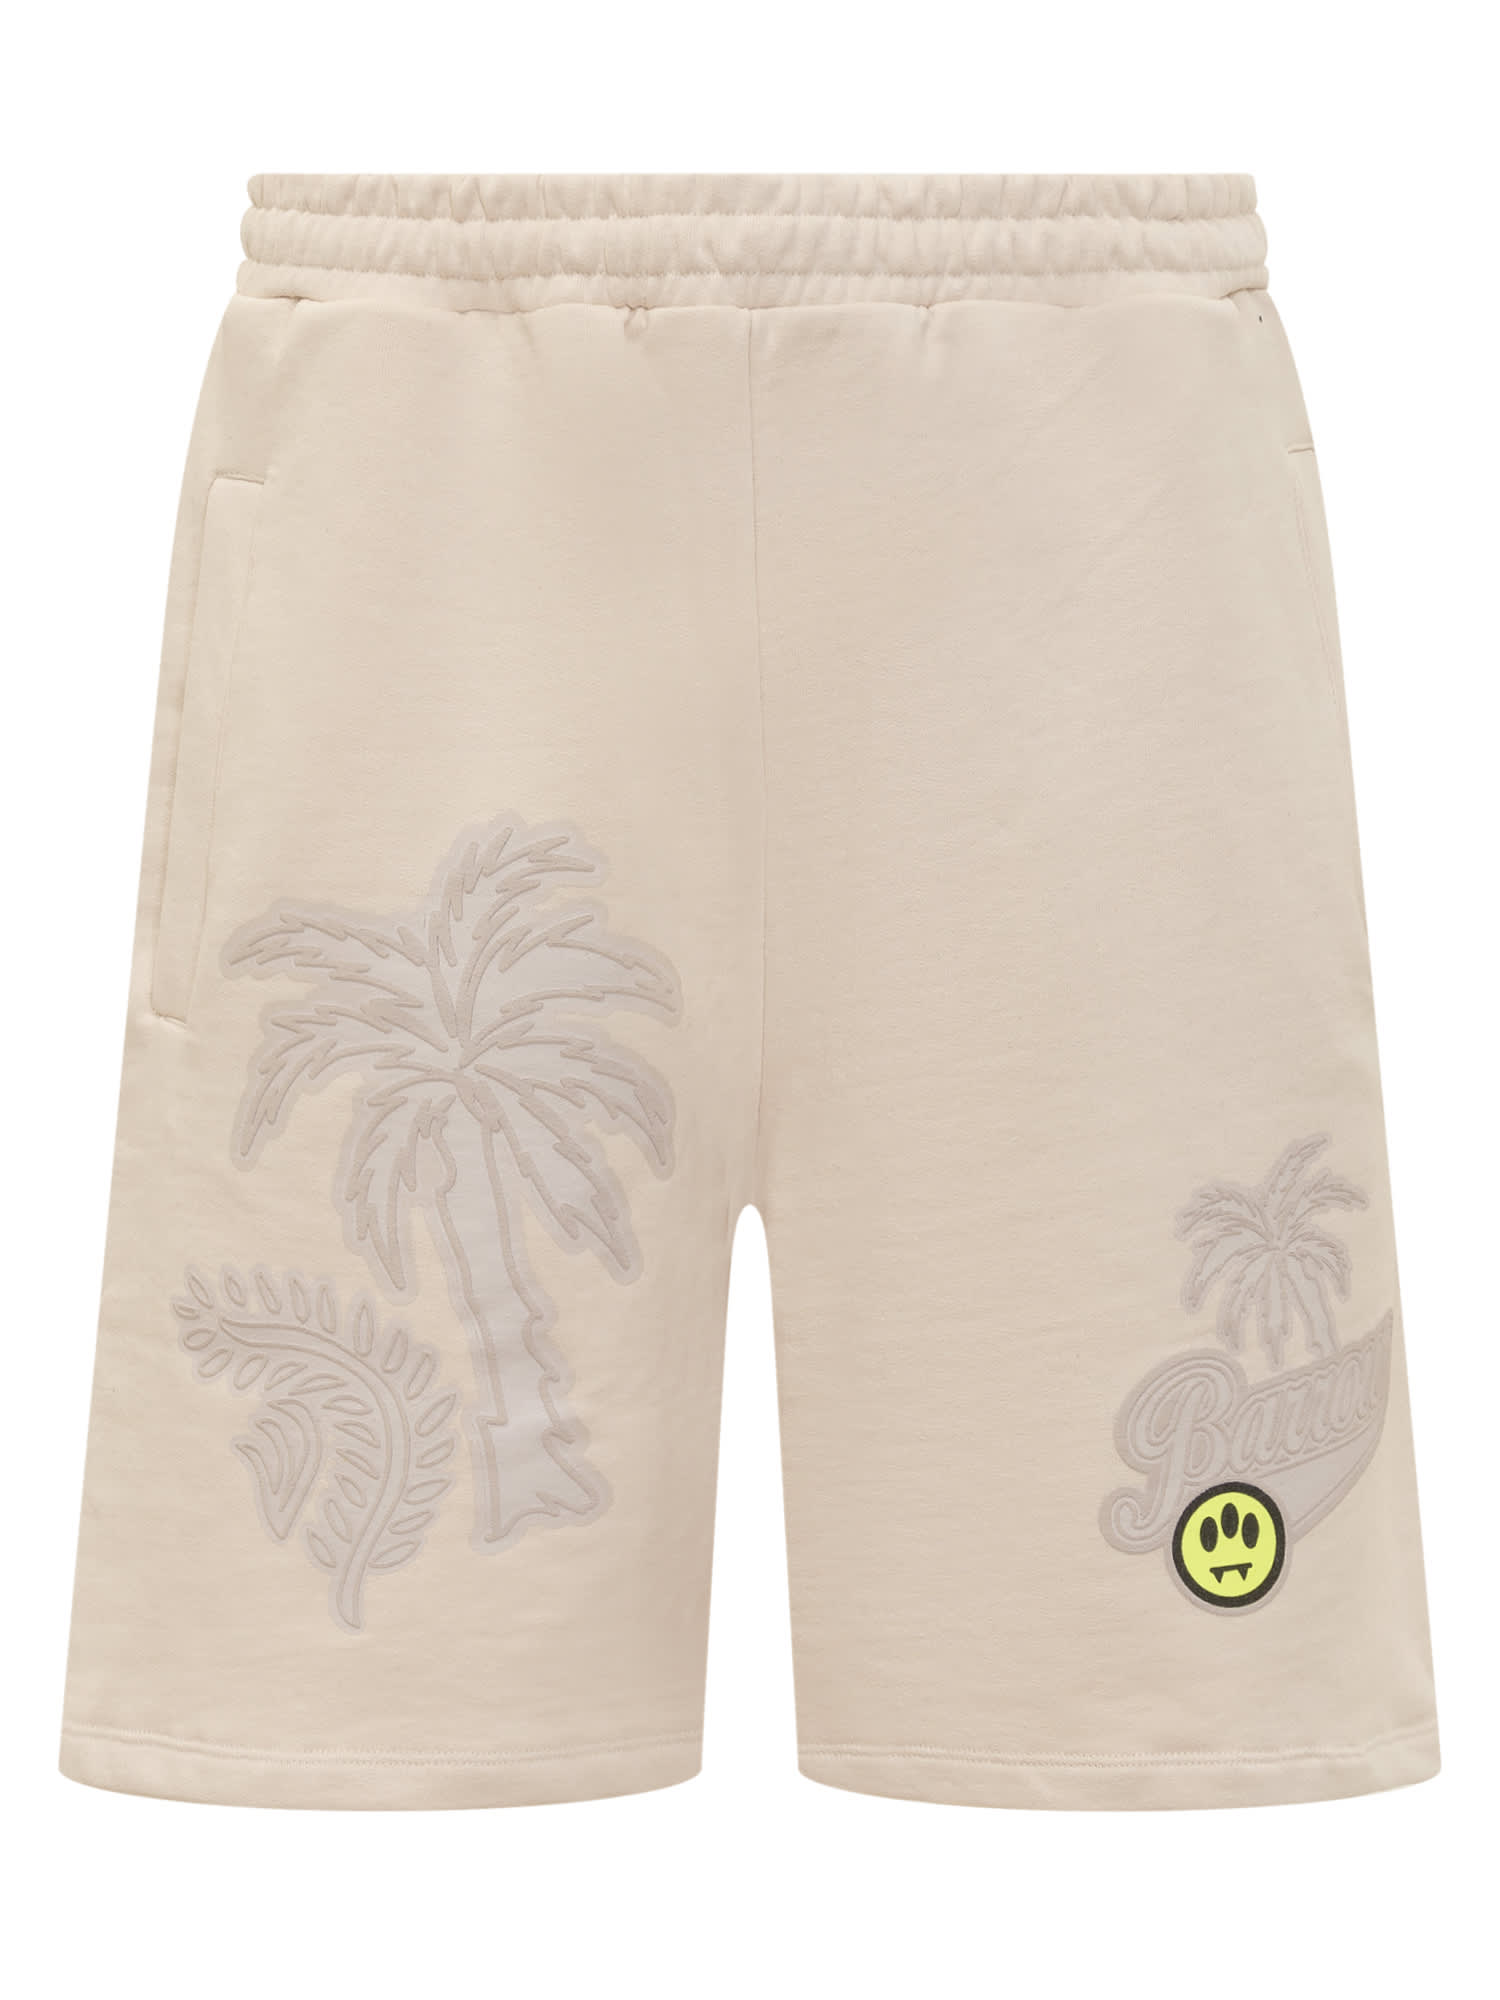 Palm Shorts